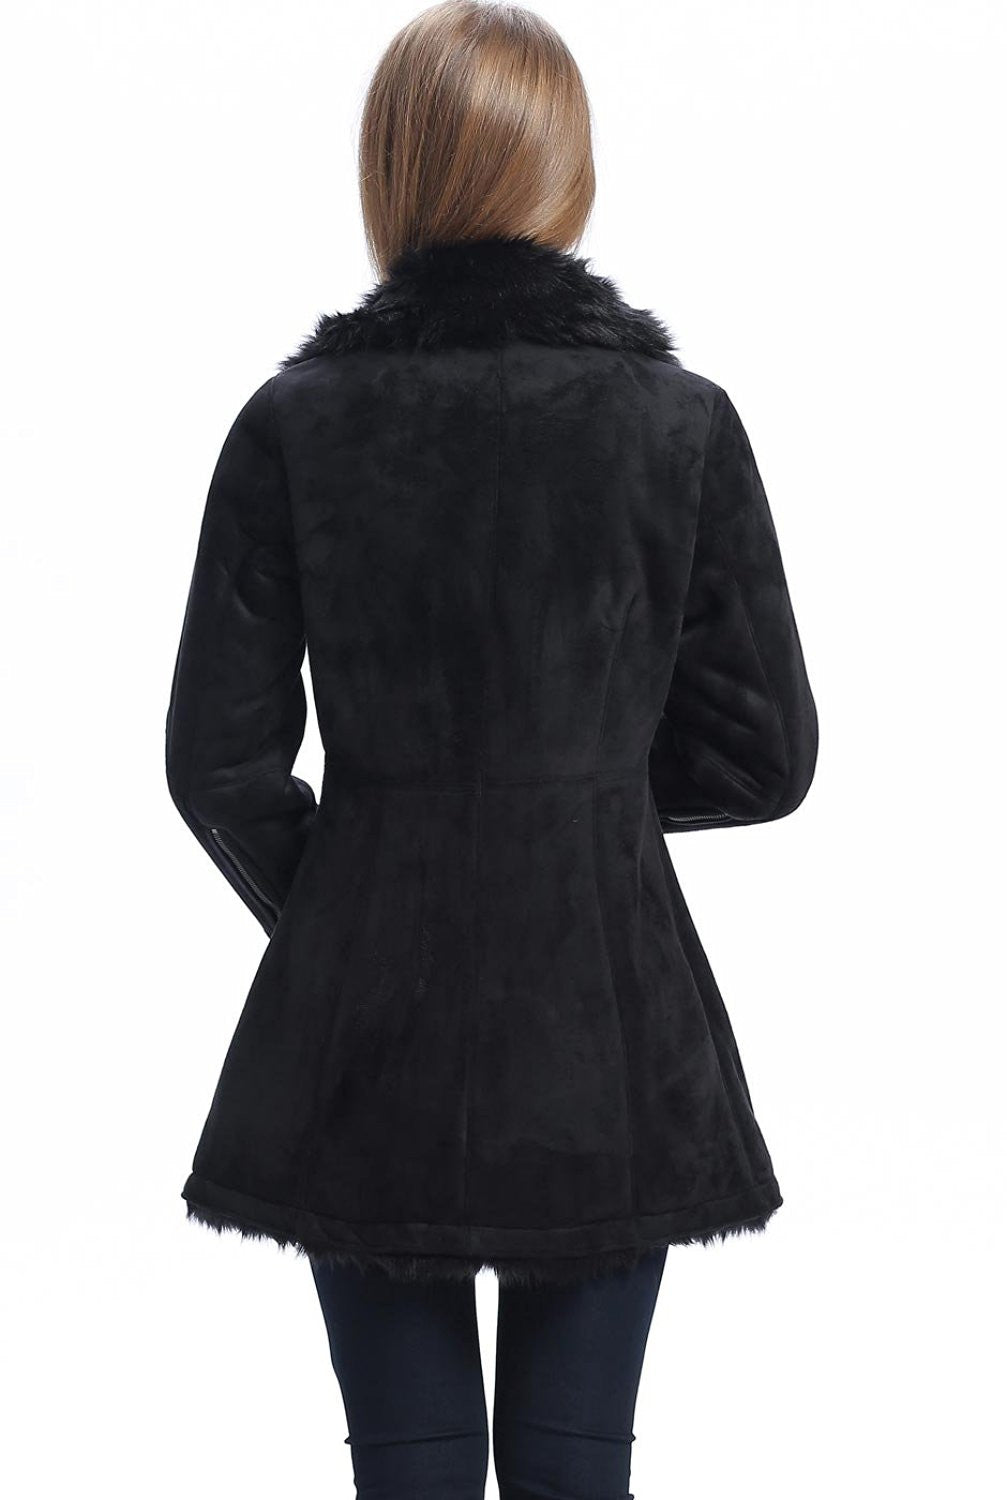 BGSD Women's "Zara" Zip Front Faux Shearling Coat